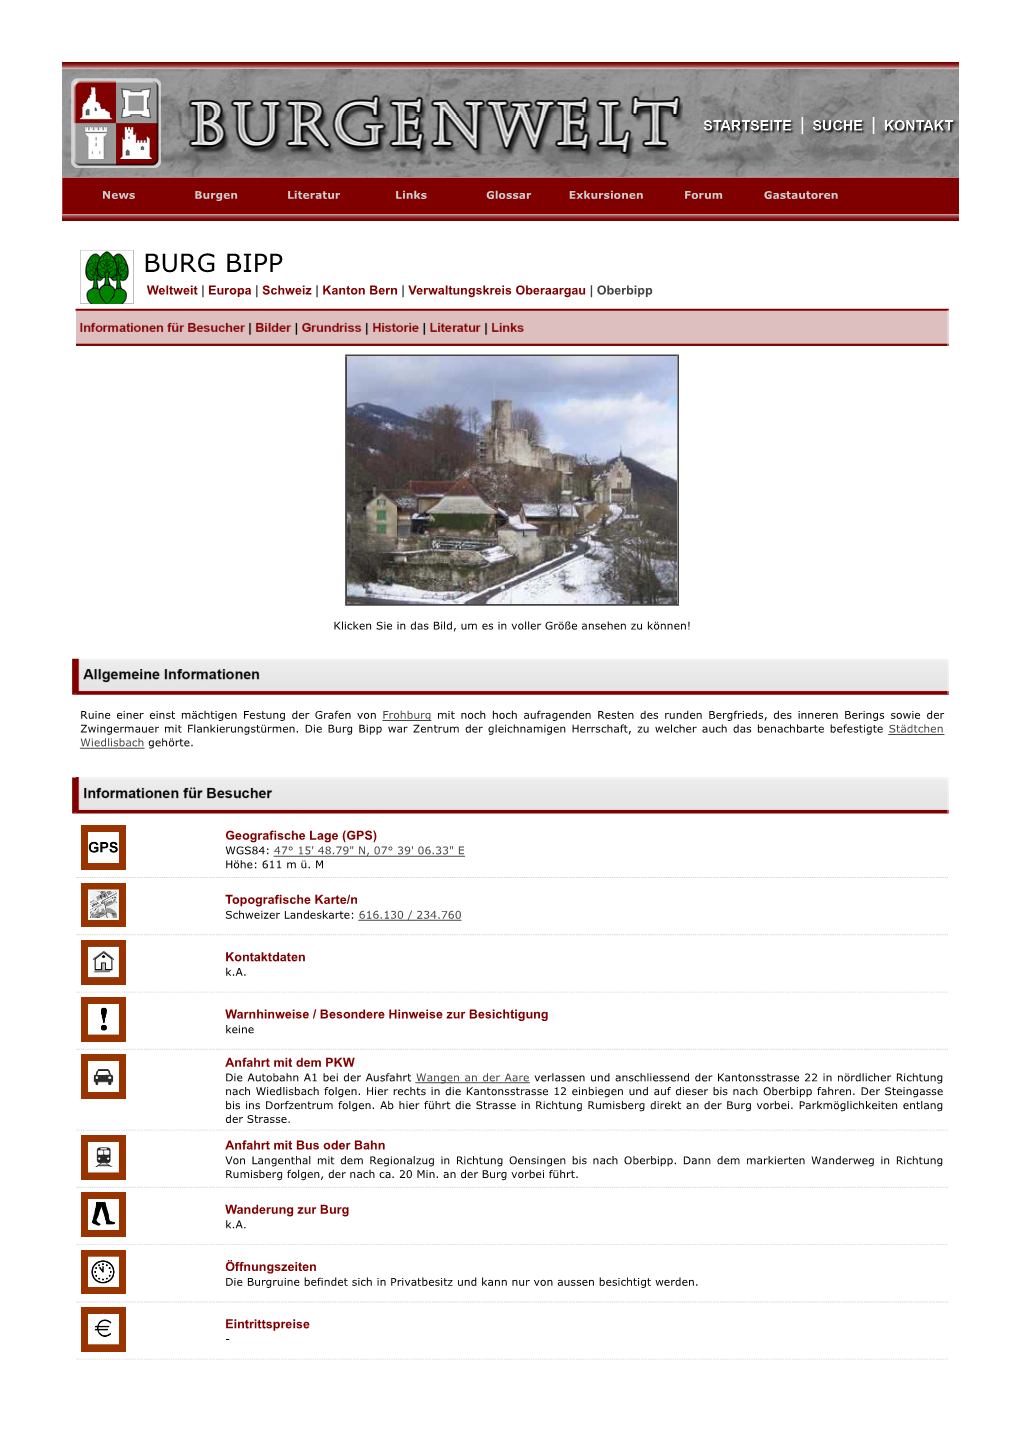 BIPP Weltweit | Europa | Schweiz | Kanton Bern | Verwaltungskreis Oberaargau | Oberbipp